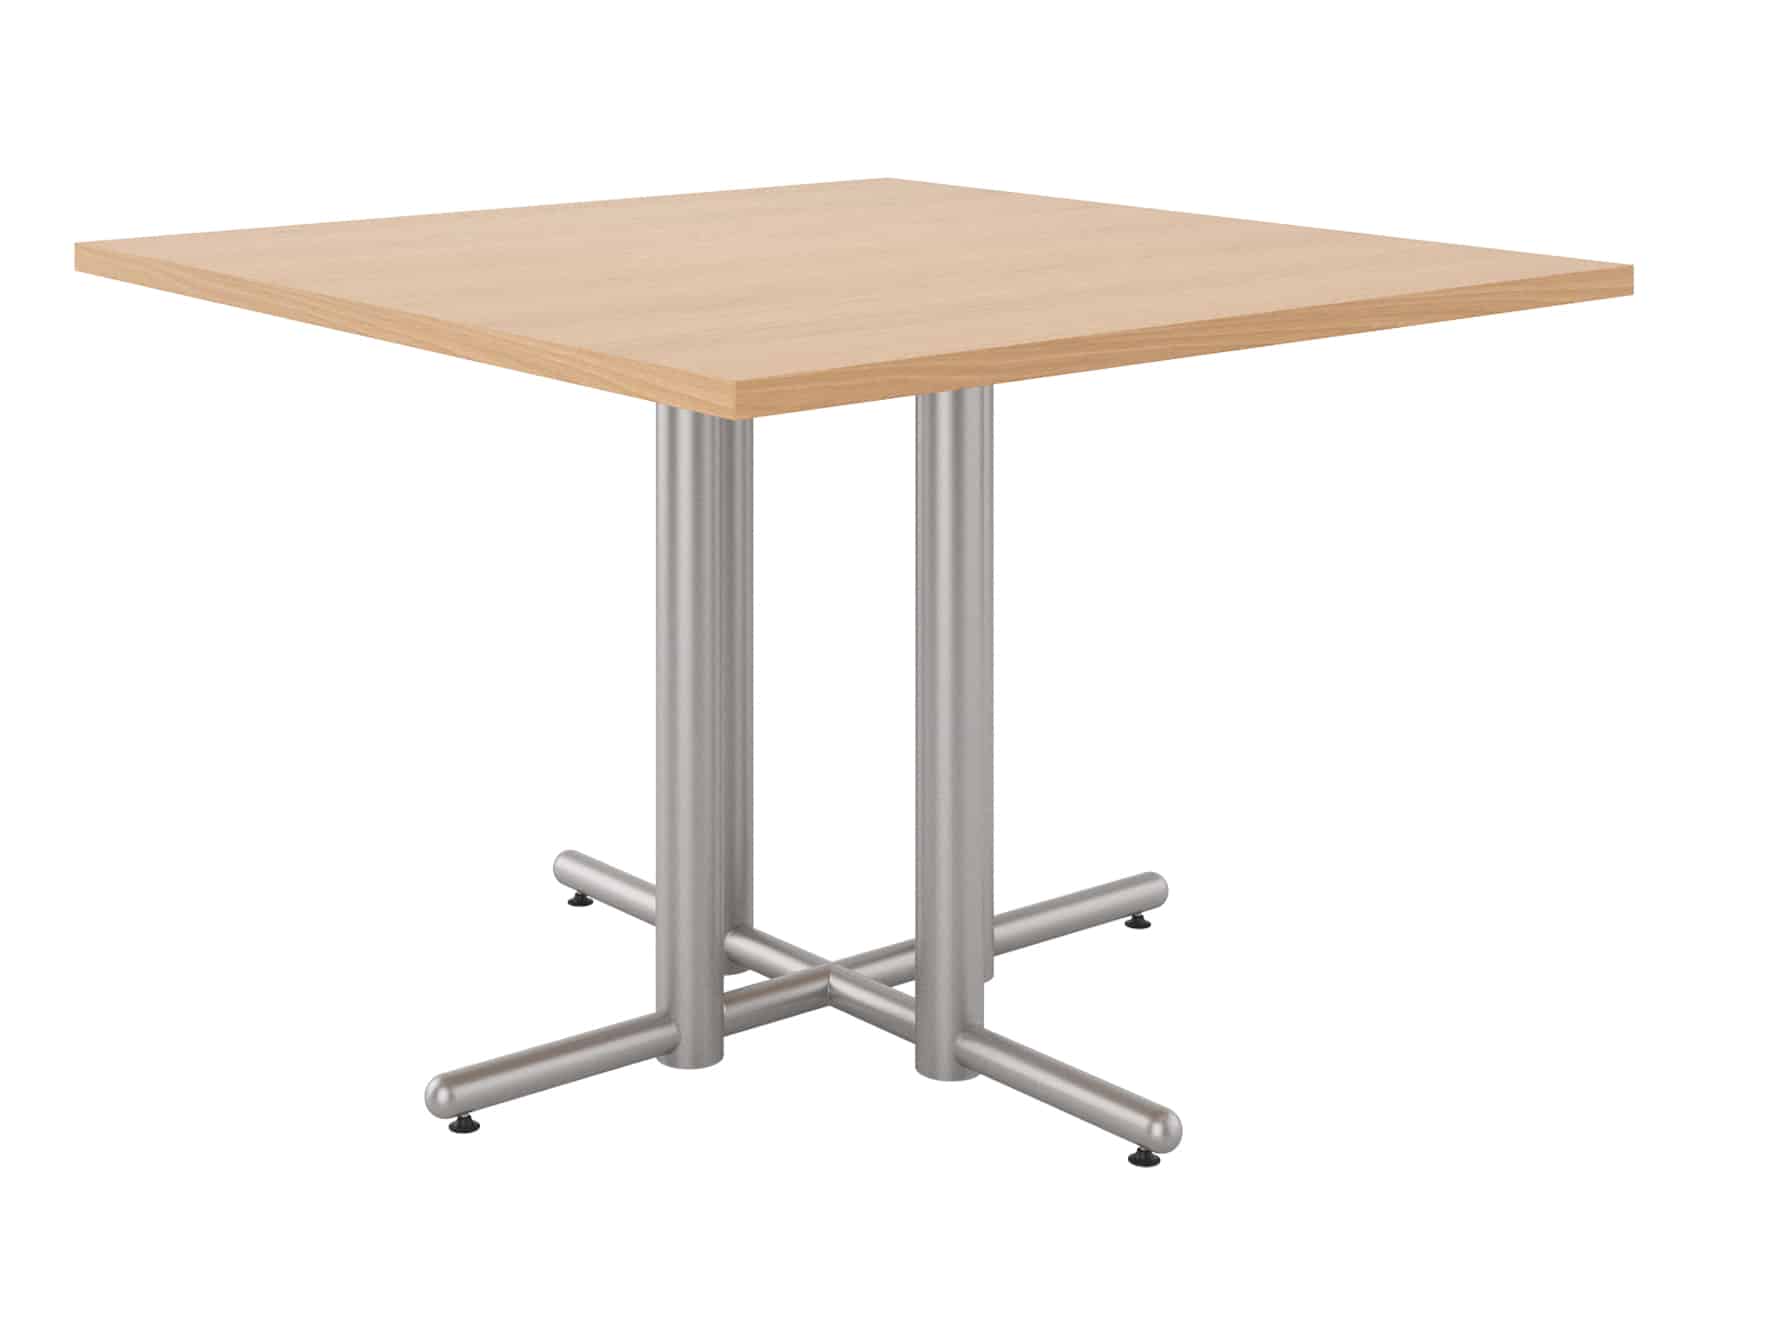 8642SQX4 Square Table General Purpose Table, 4-Column X Base